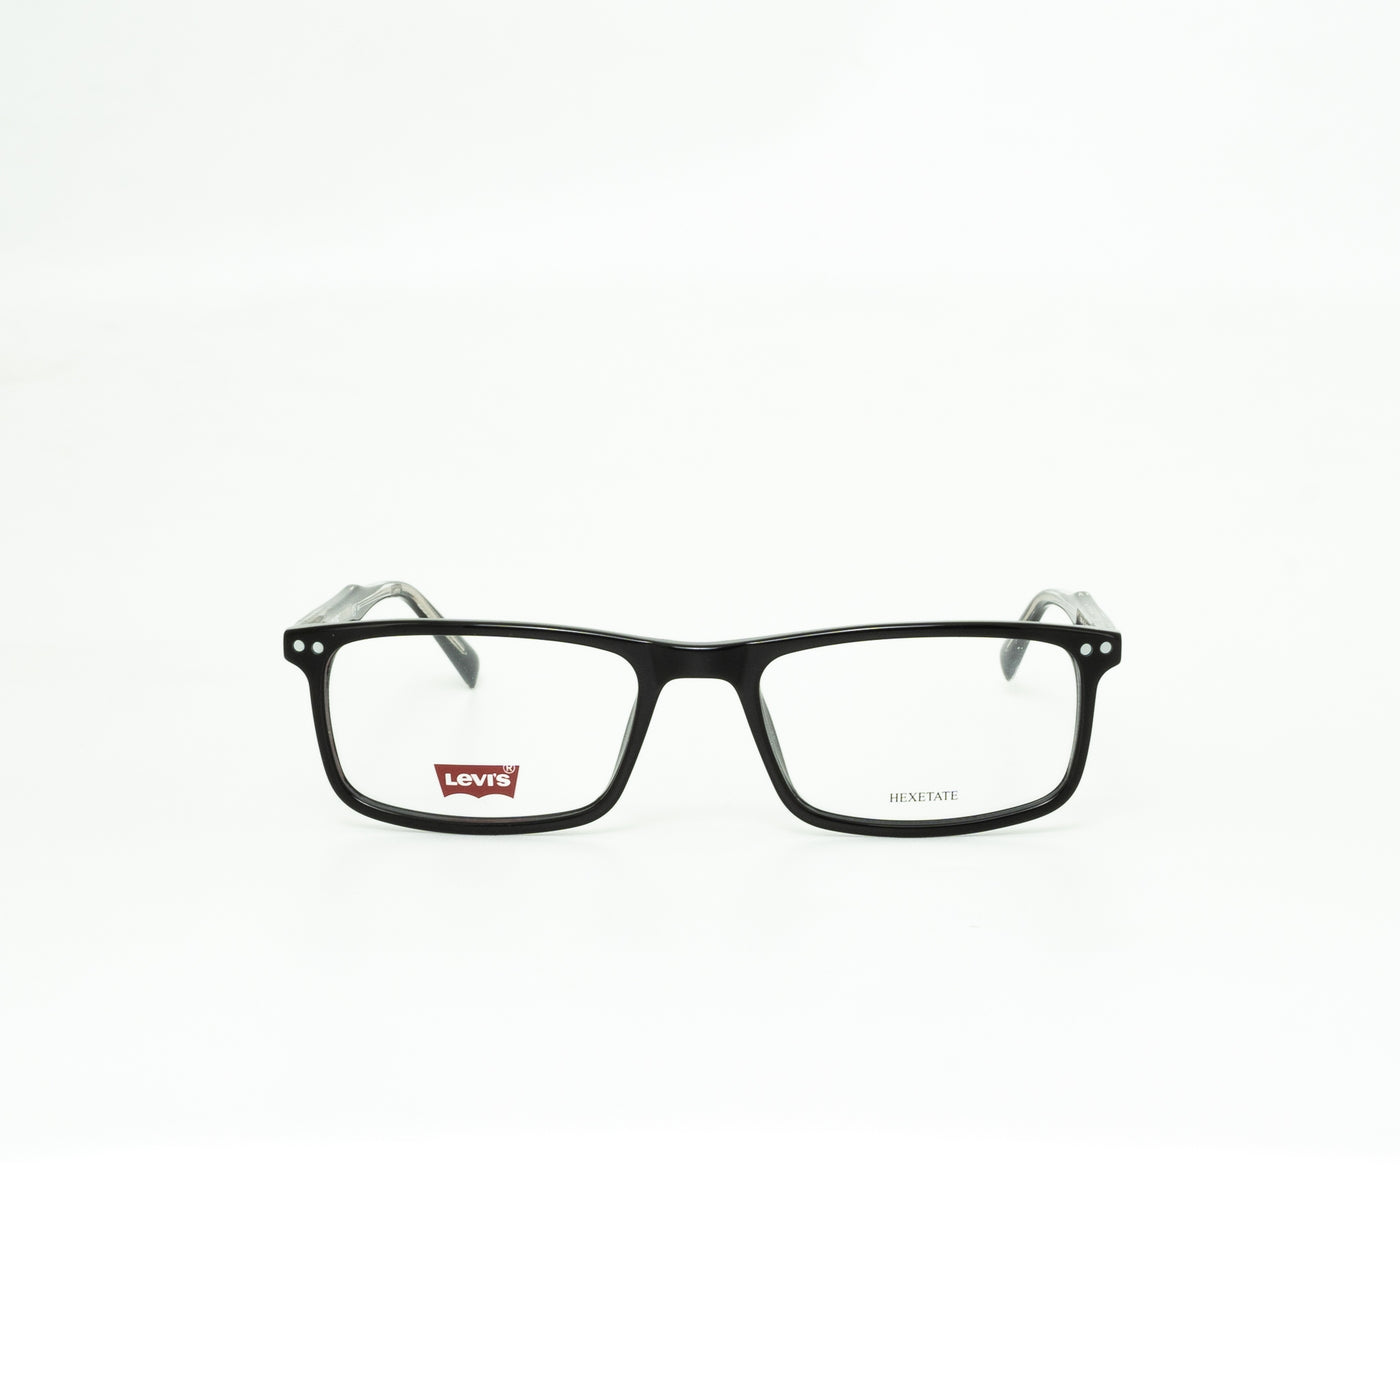 Levis LS502080755 | Eyeglasses - Vision Express Optical Philippines